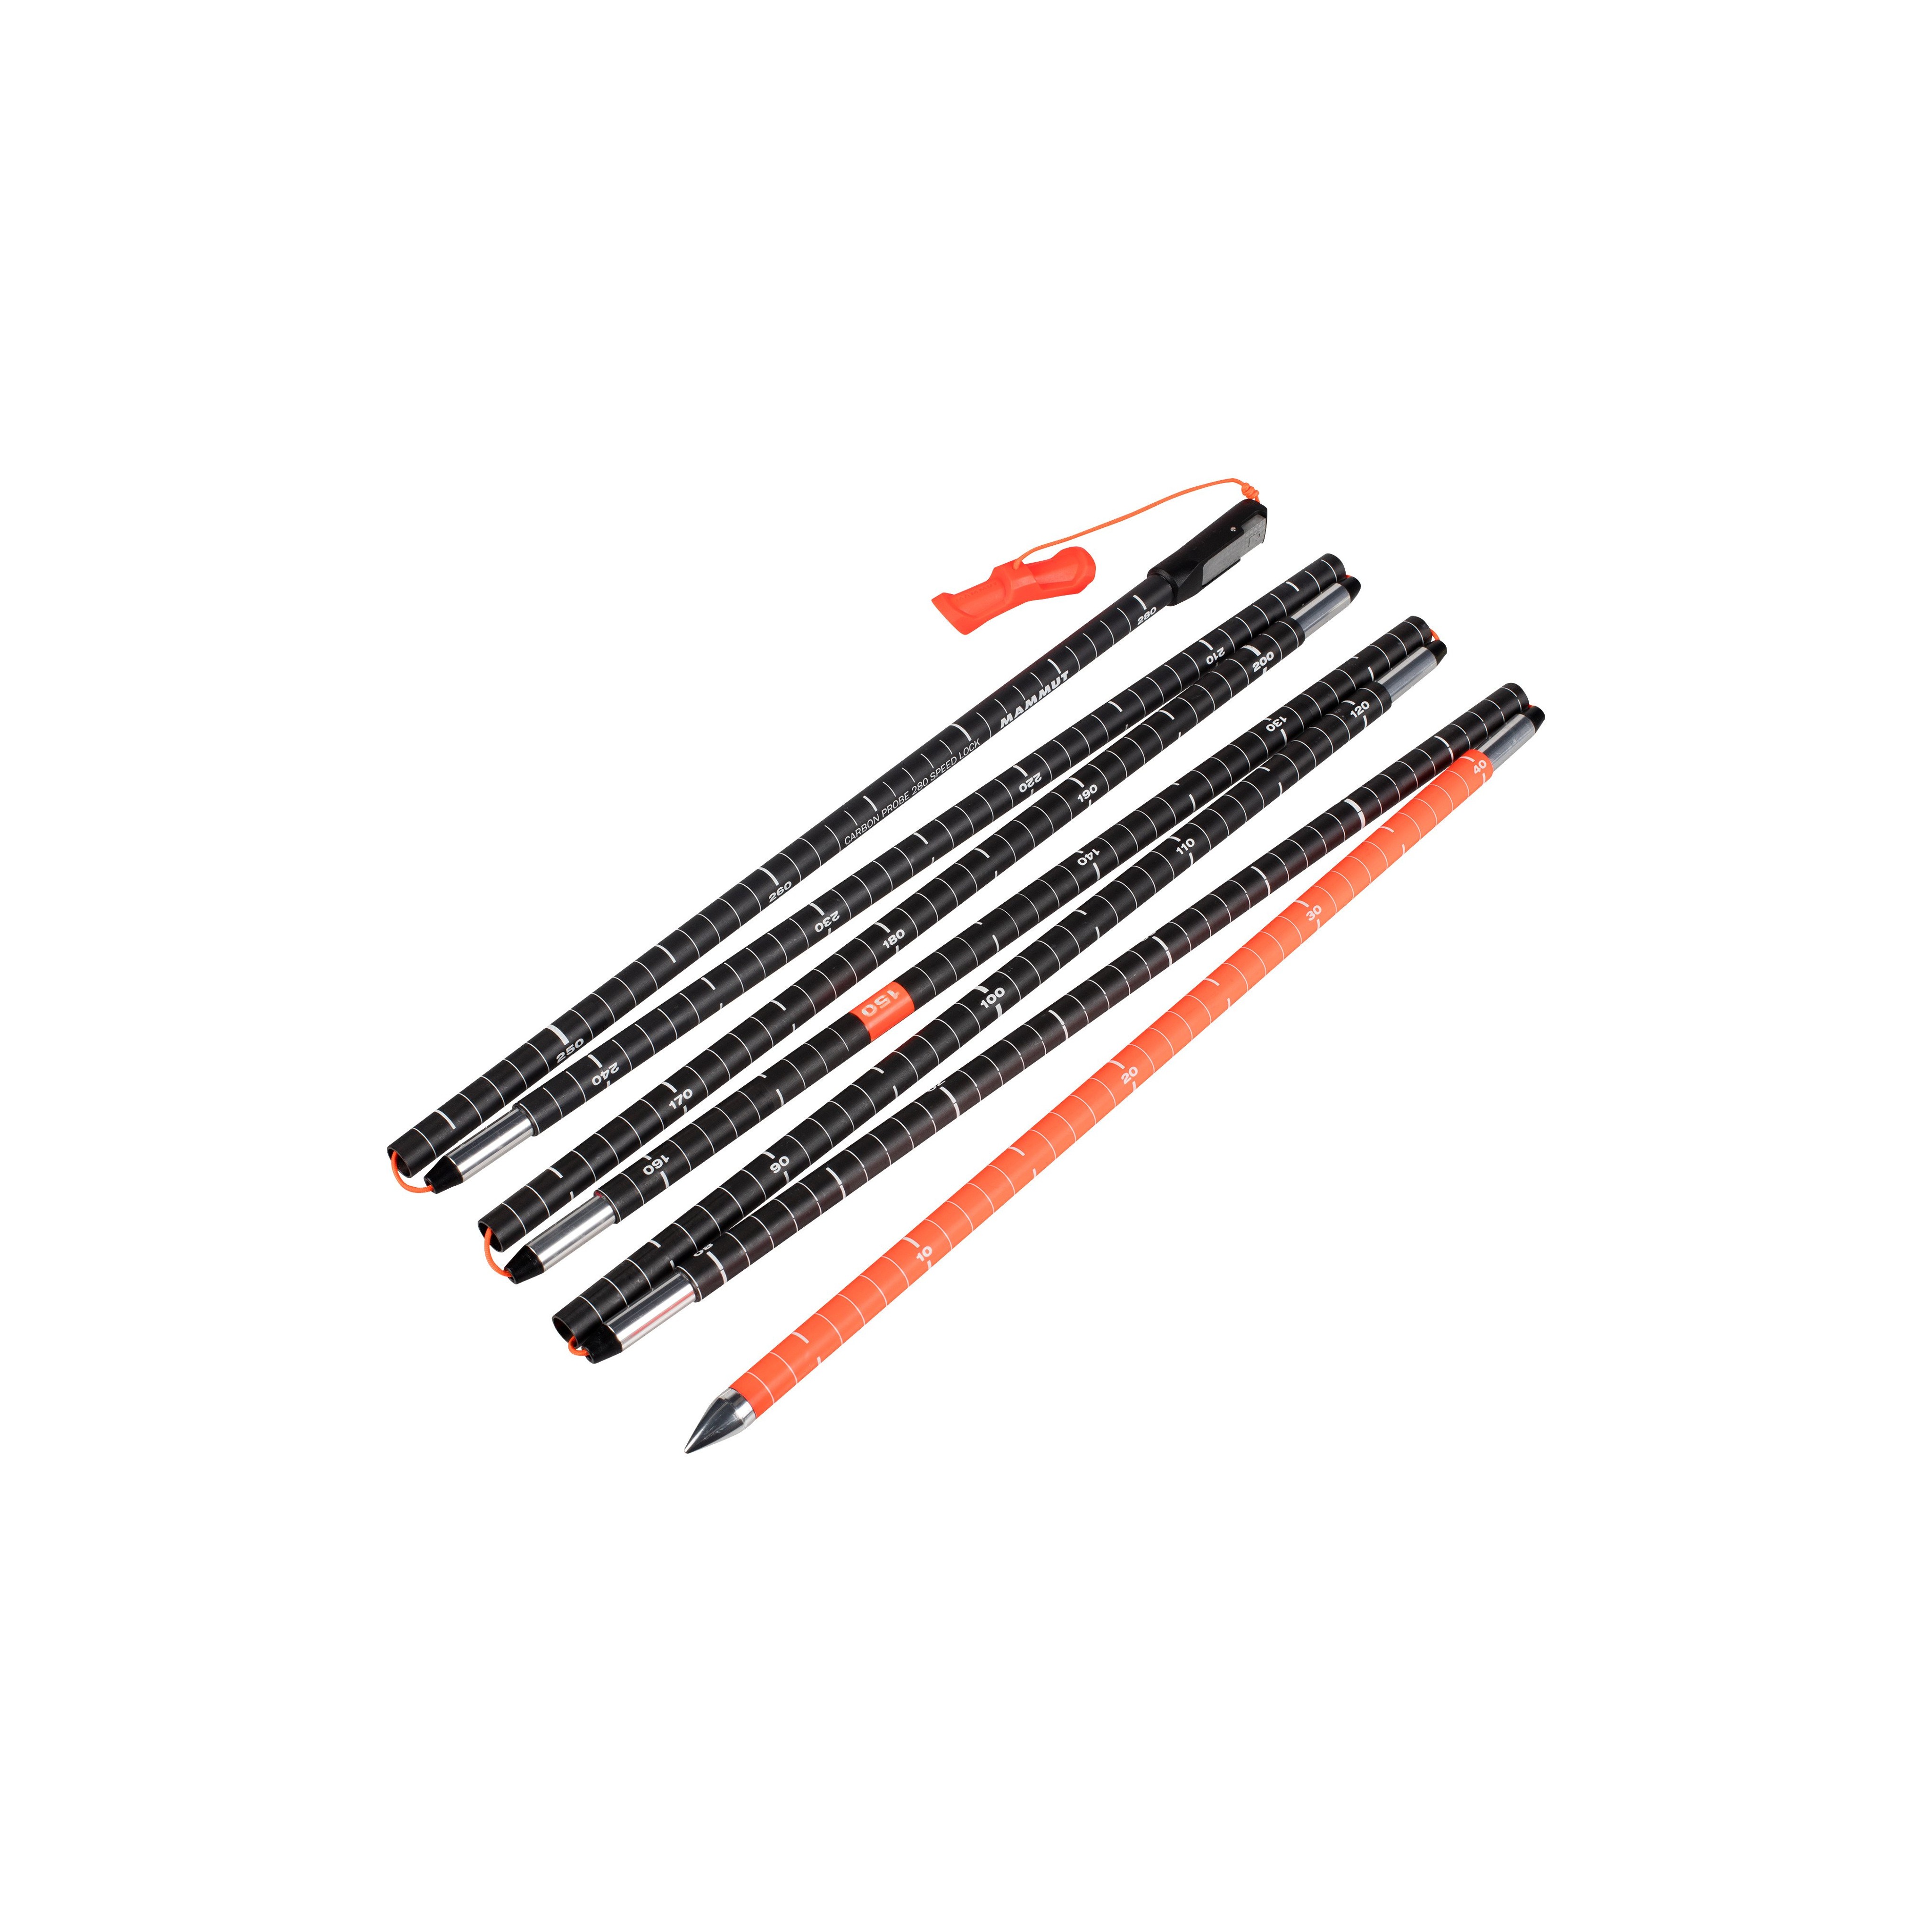 Carbon Probe 280 speed lock - neon orange, one size product image